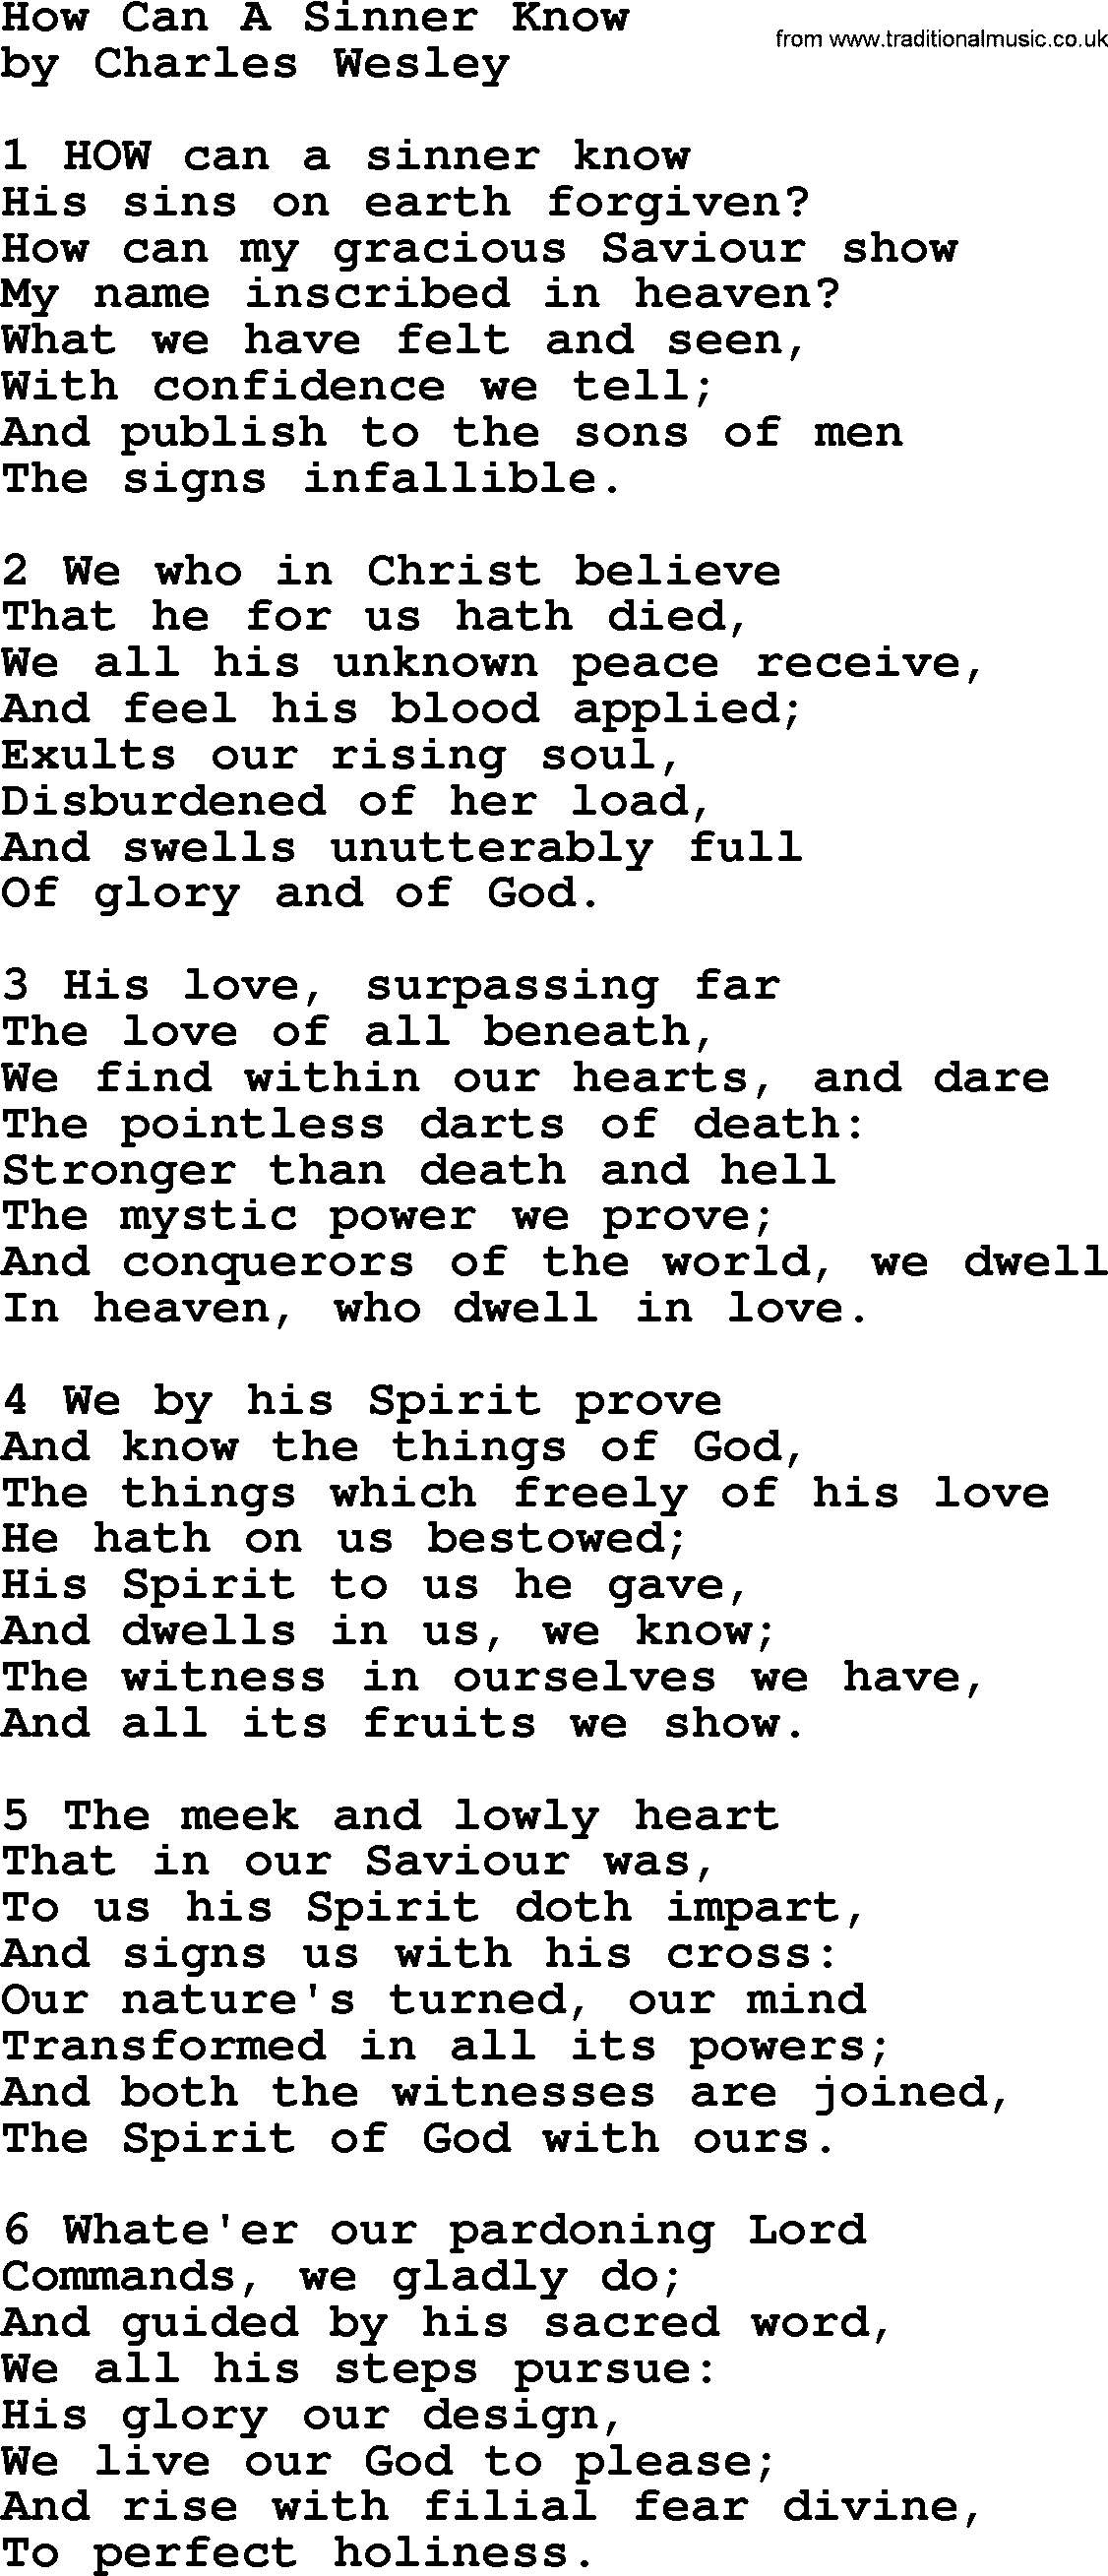 Charles Wesley hymn: How Can A Sinner Know, lyrics